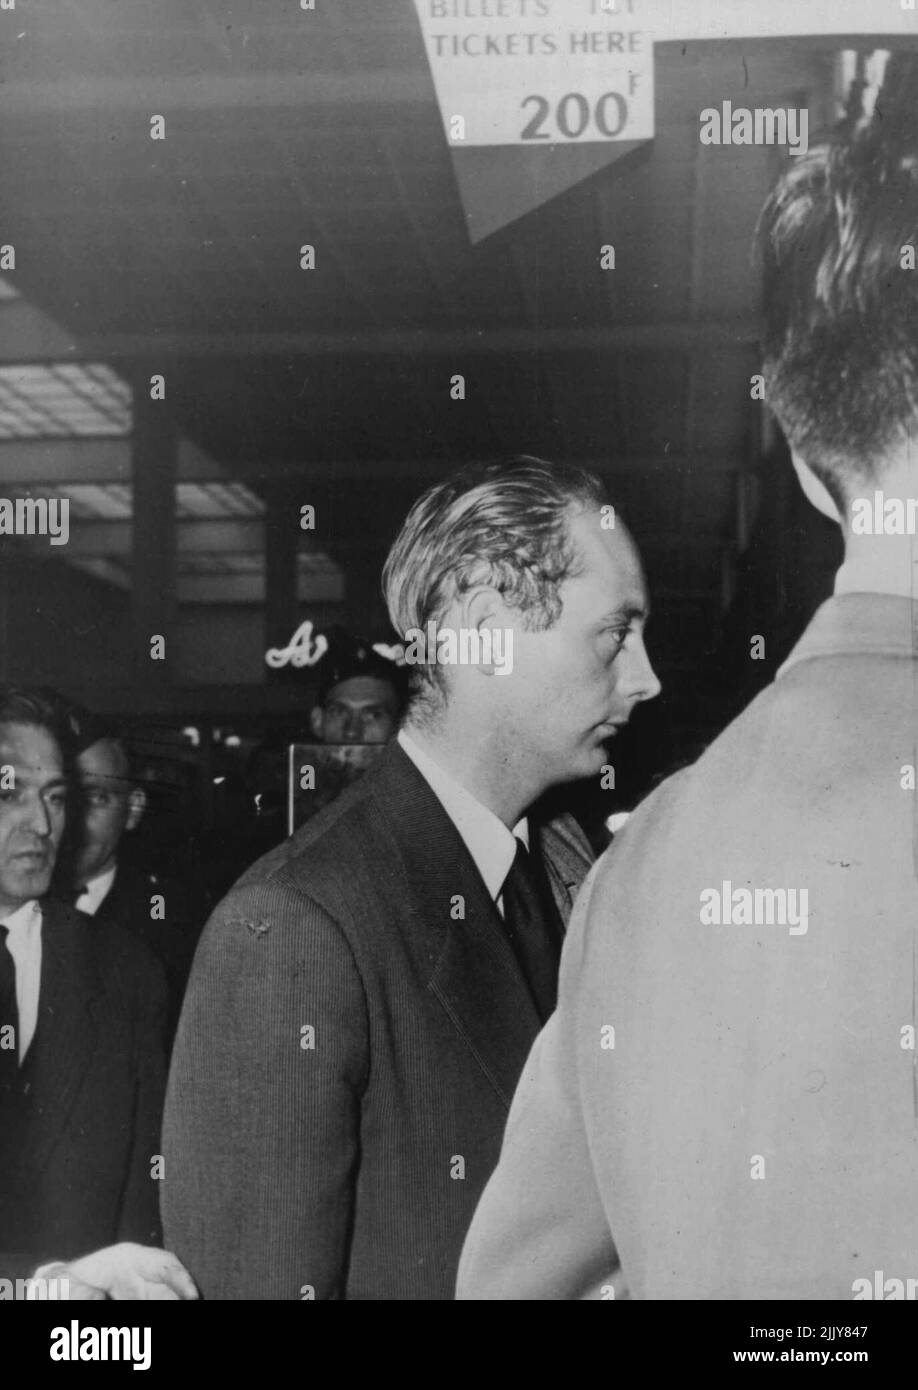 Peer voleva per 'spese gravi' -- Lord Montague di Beaulieu al suo arrivo all'aeroporto di Orlt. Lord Montague di Beaulieu, voluto dalla polizia britannica per le 'accuse gravi', è arrivato ieri a Parigi da New York. Ottobre 22, 1953. (Foto di Paul Popper). Foto Stock